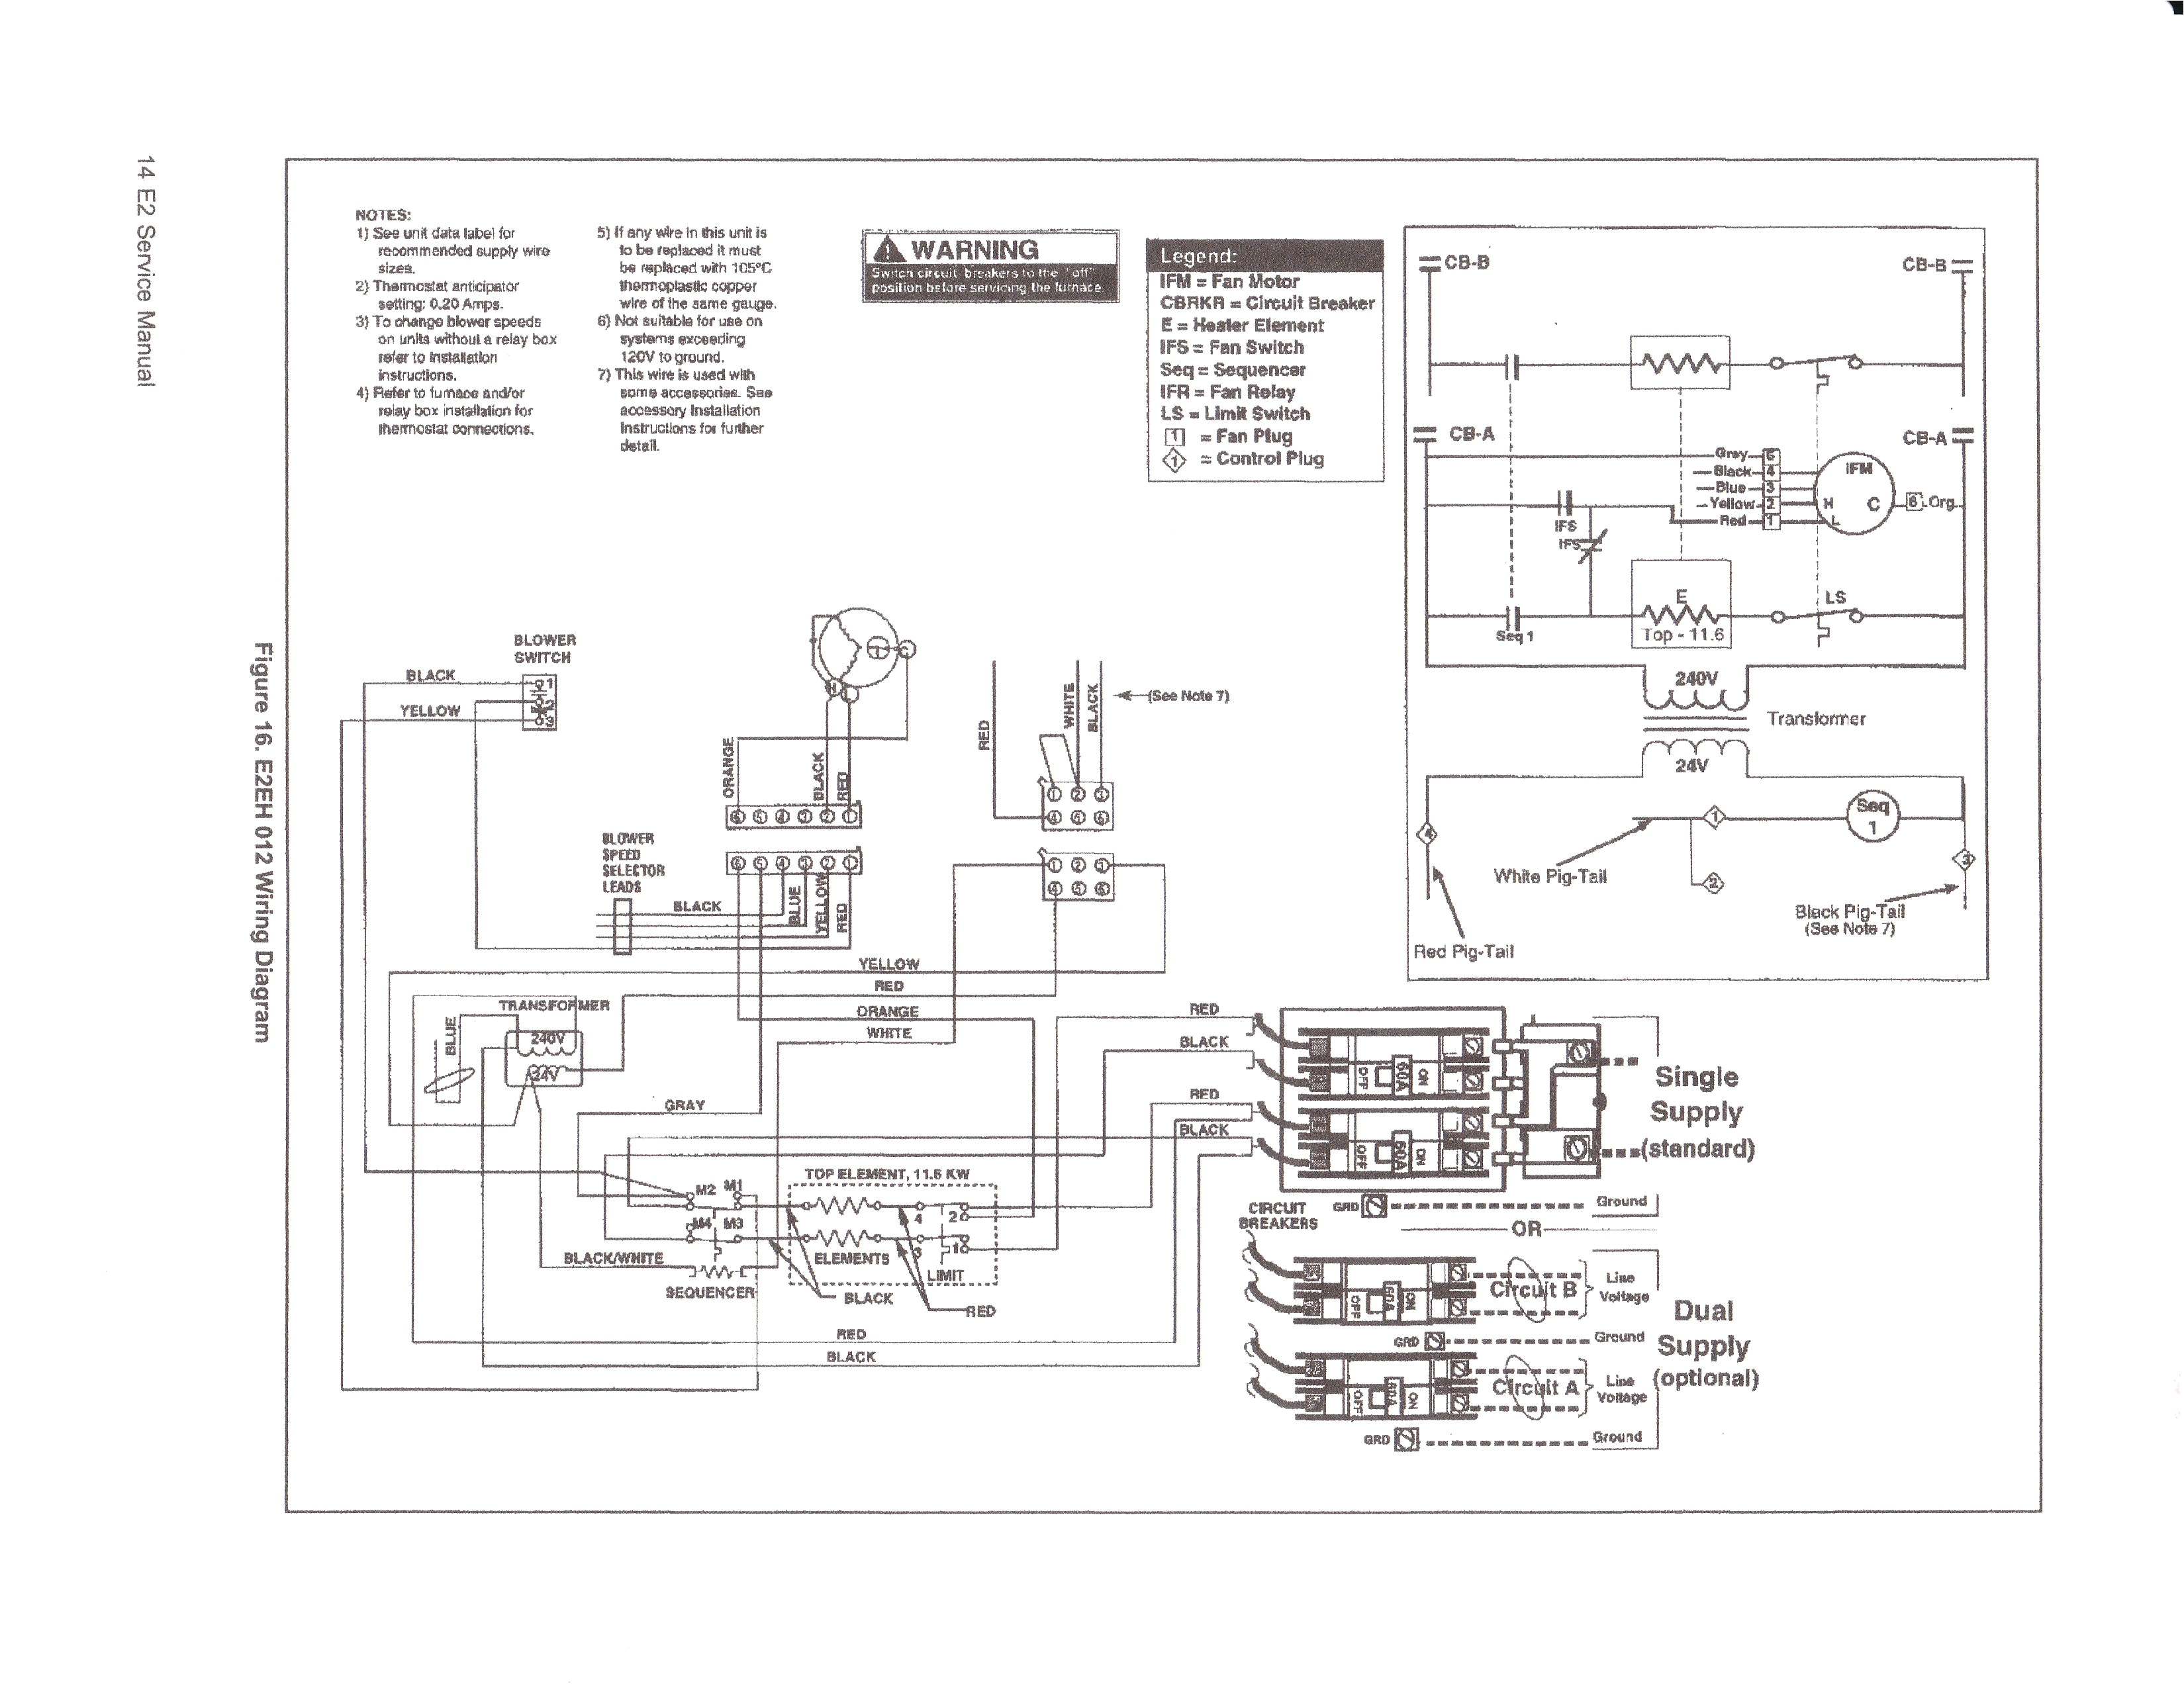 wiring diagram for tempstar heat pump electrical schematic wiring tempstar heat pump wiring schematic